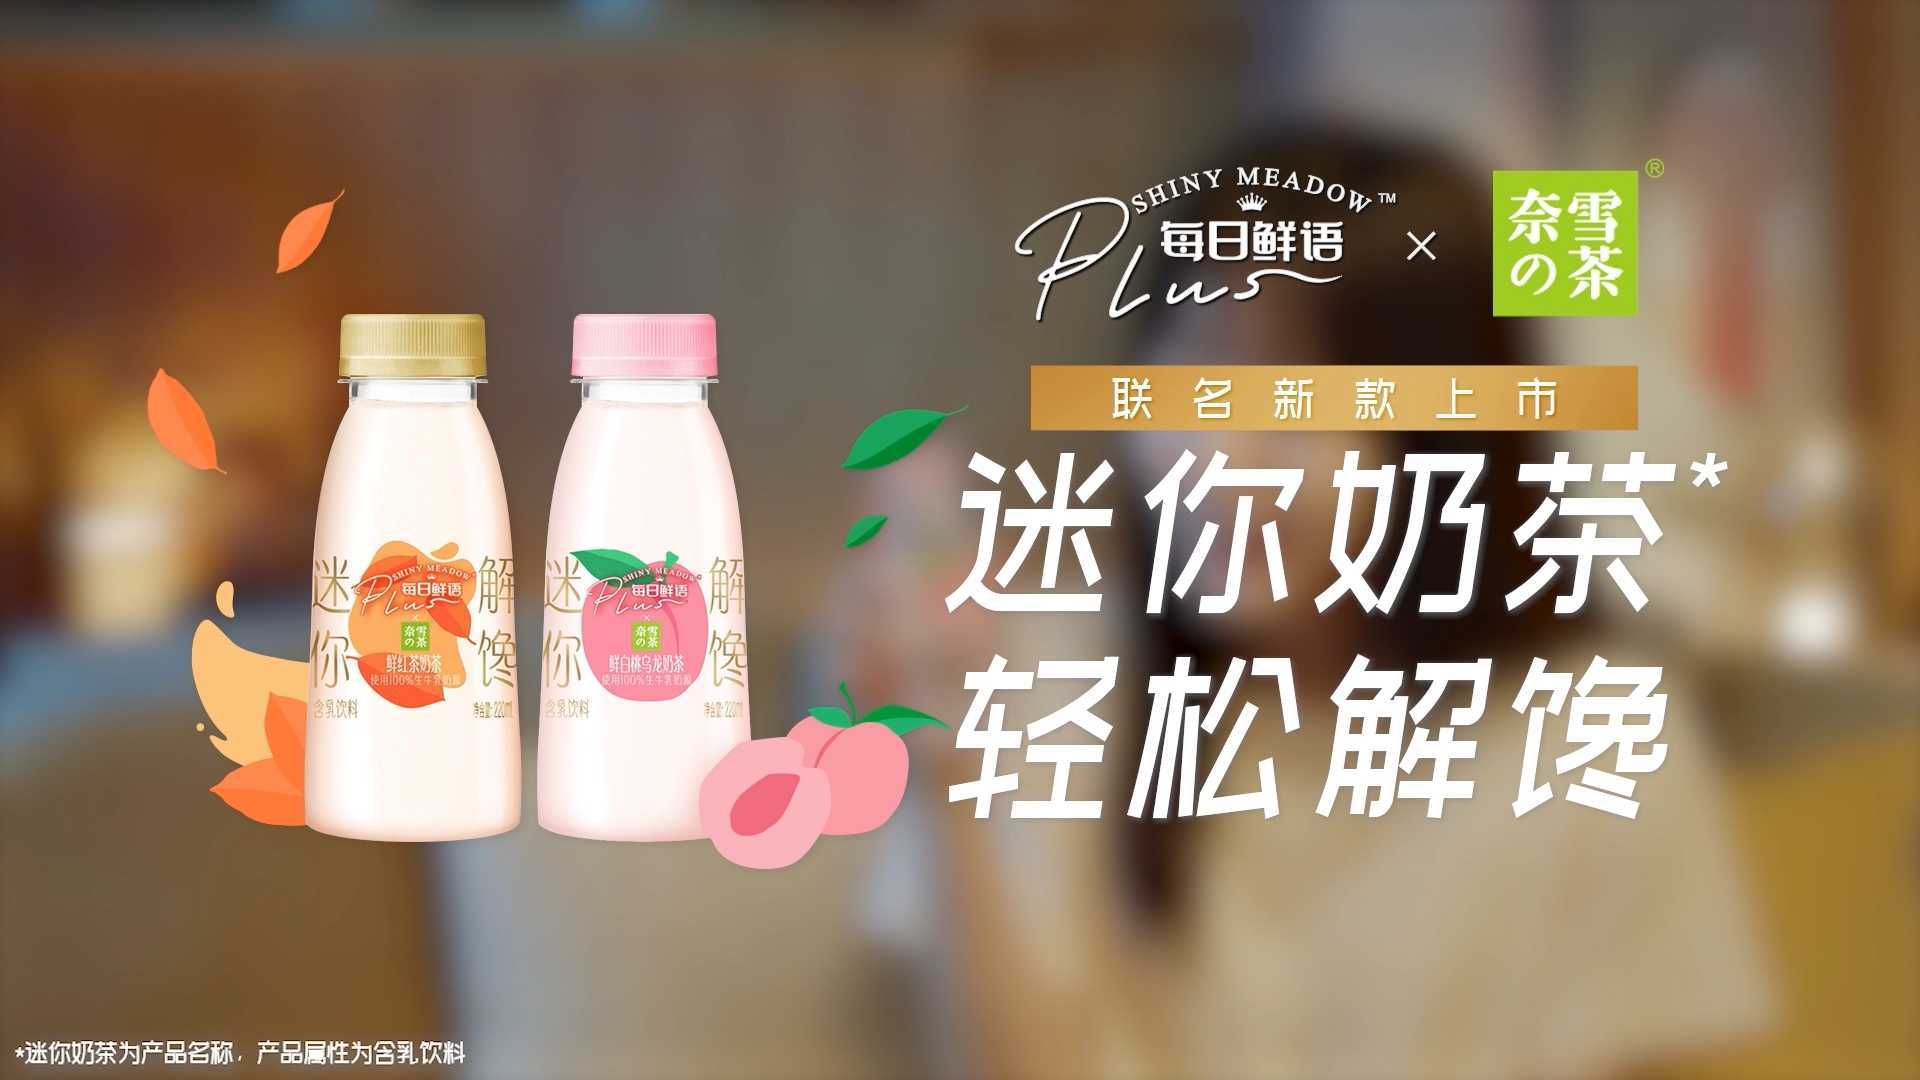 SHINY MEADOW 每日鲜语 x 奈雪の茶 迷你奶茶 趣味视频 四合一